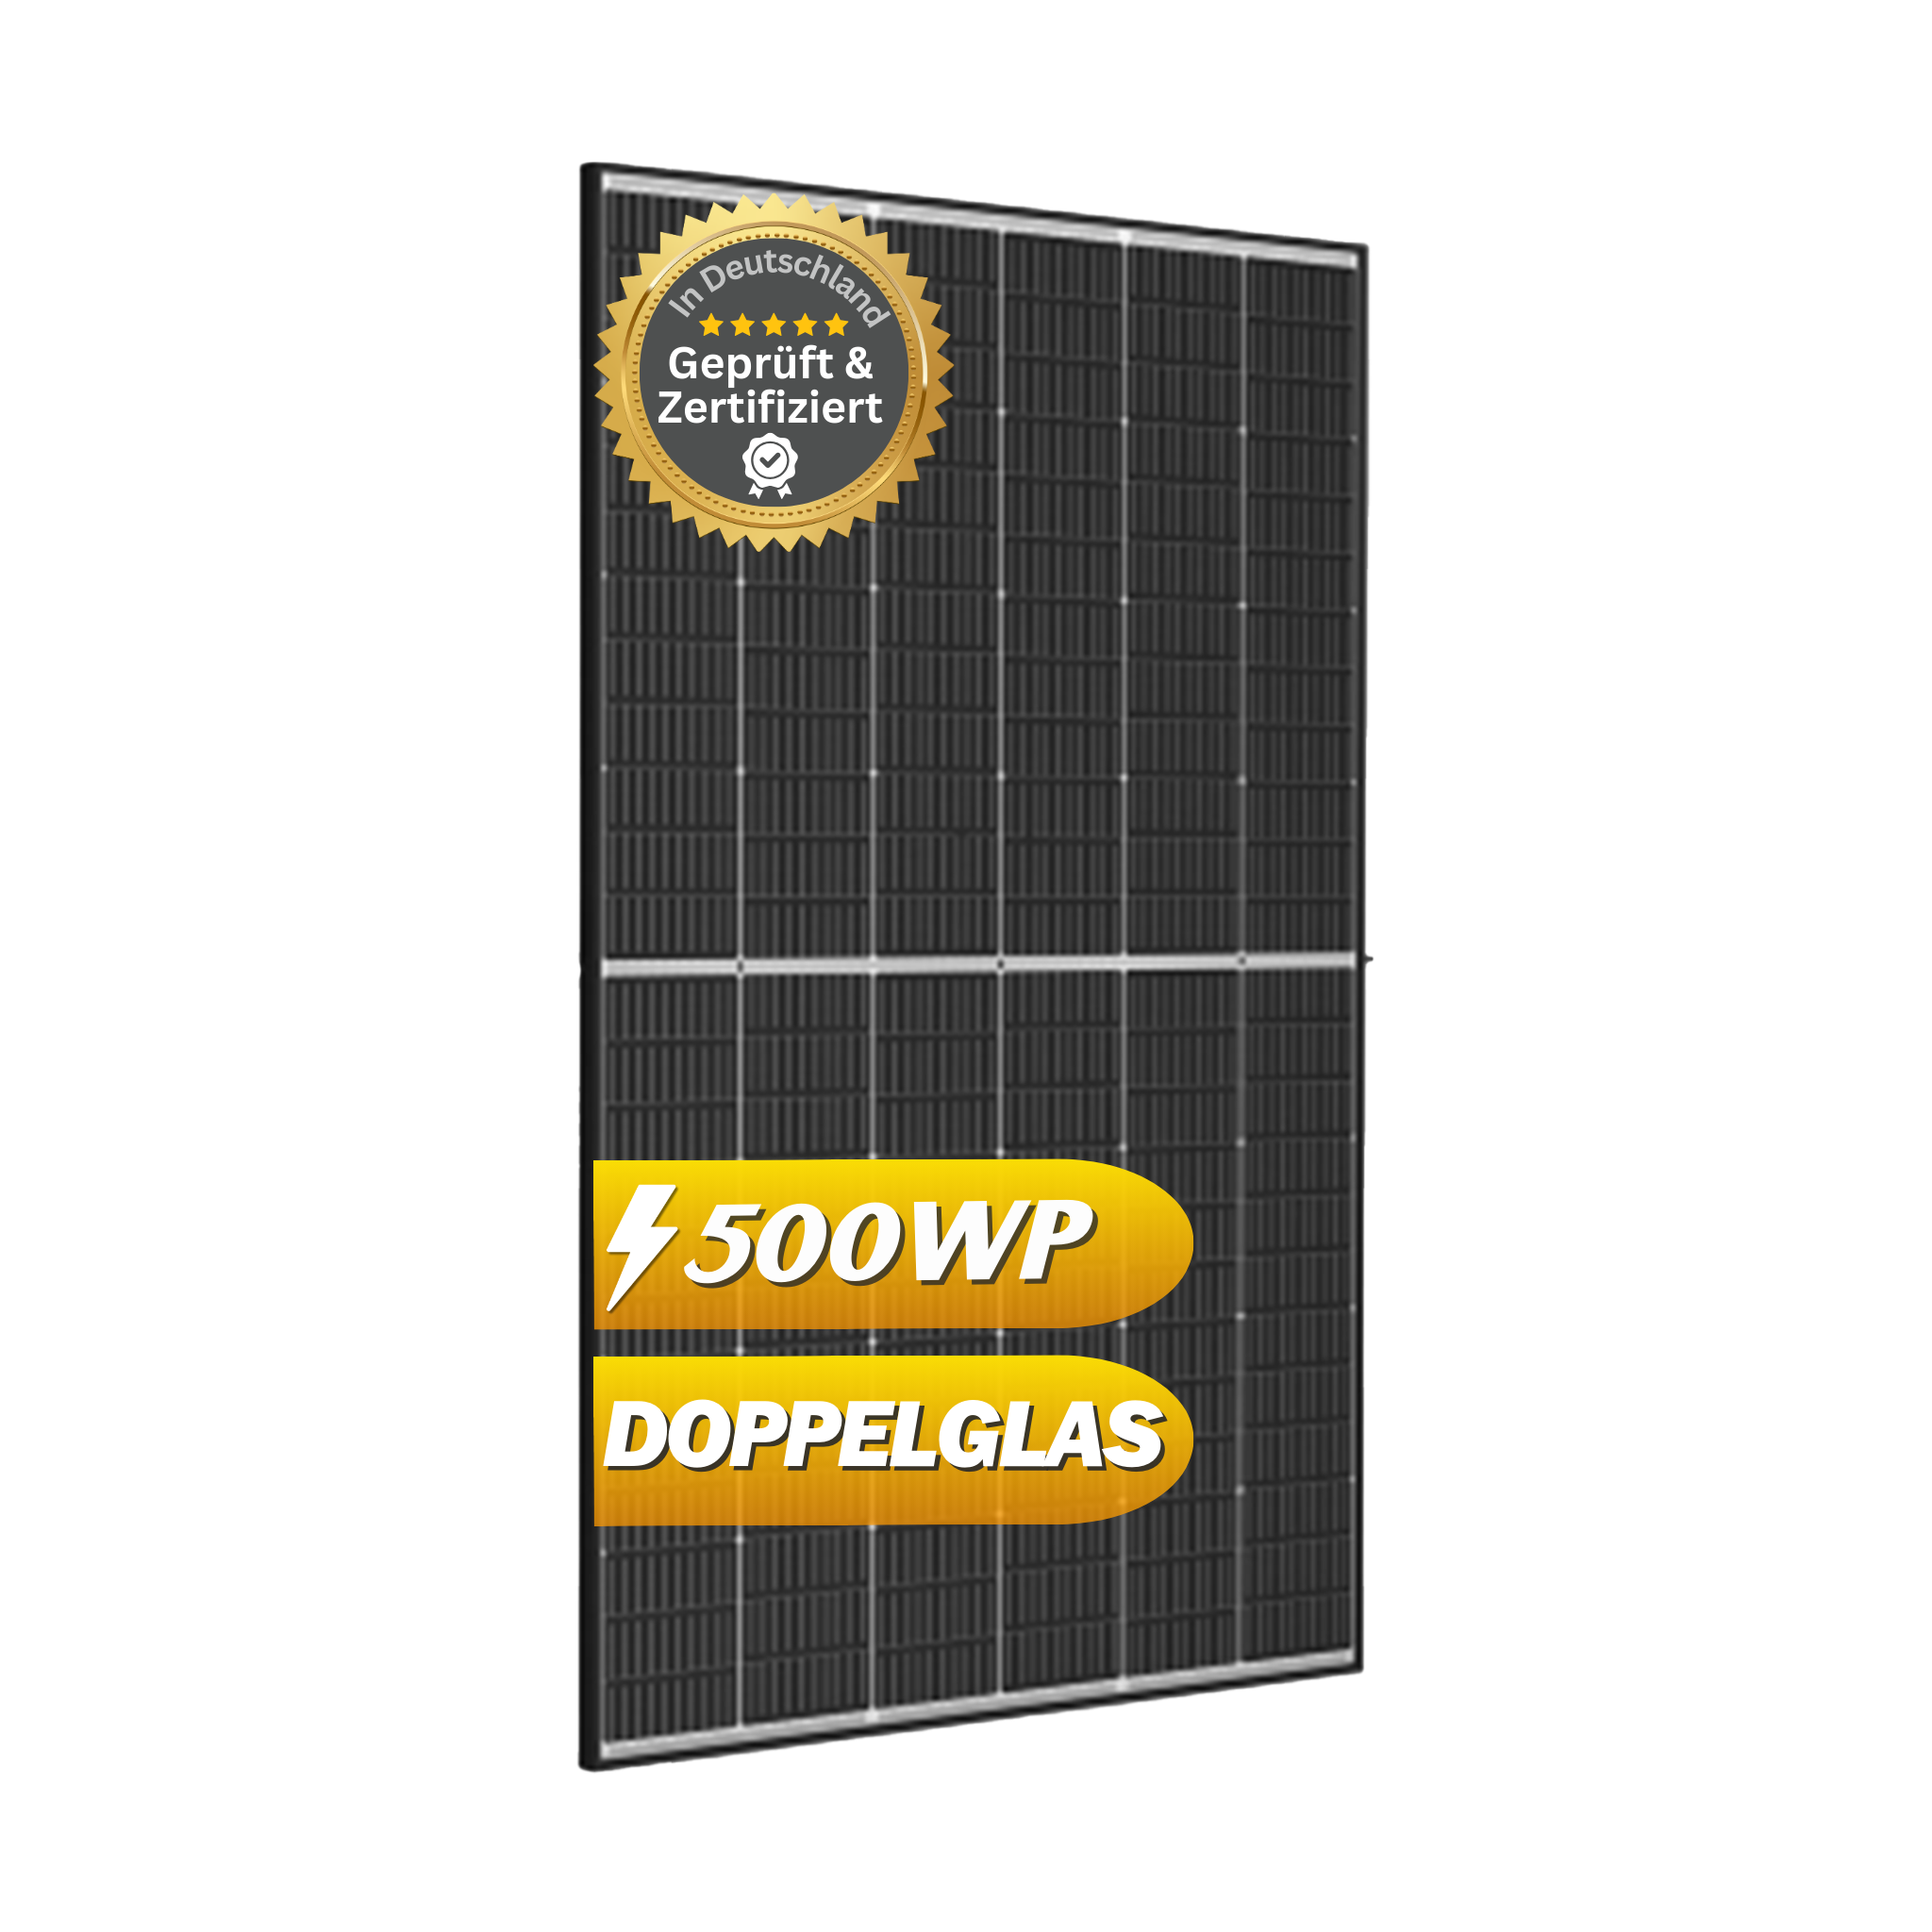 Solarmodul 500Wp Trina Solar Vertex S+ TSM-NEG18R.28 Doppelglas